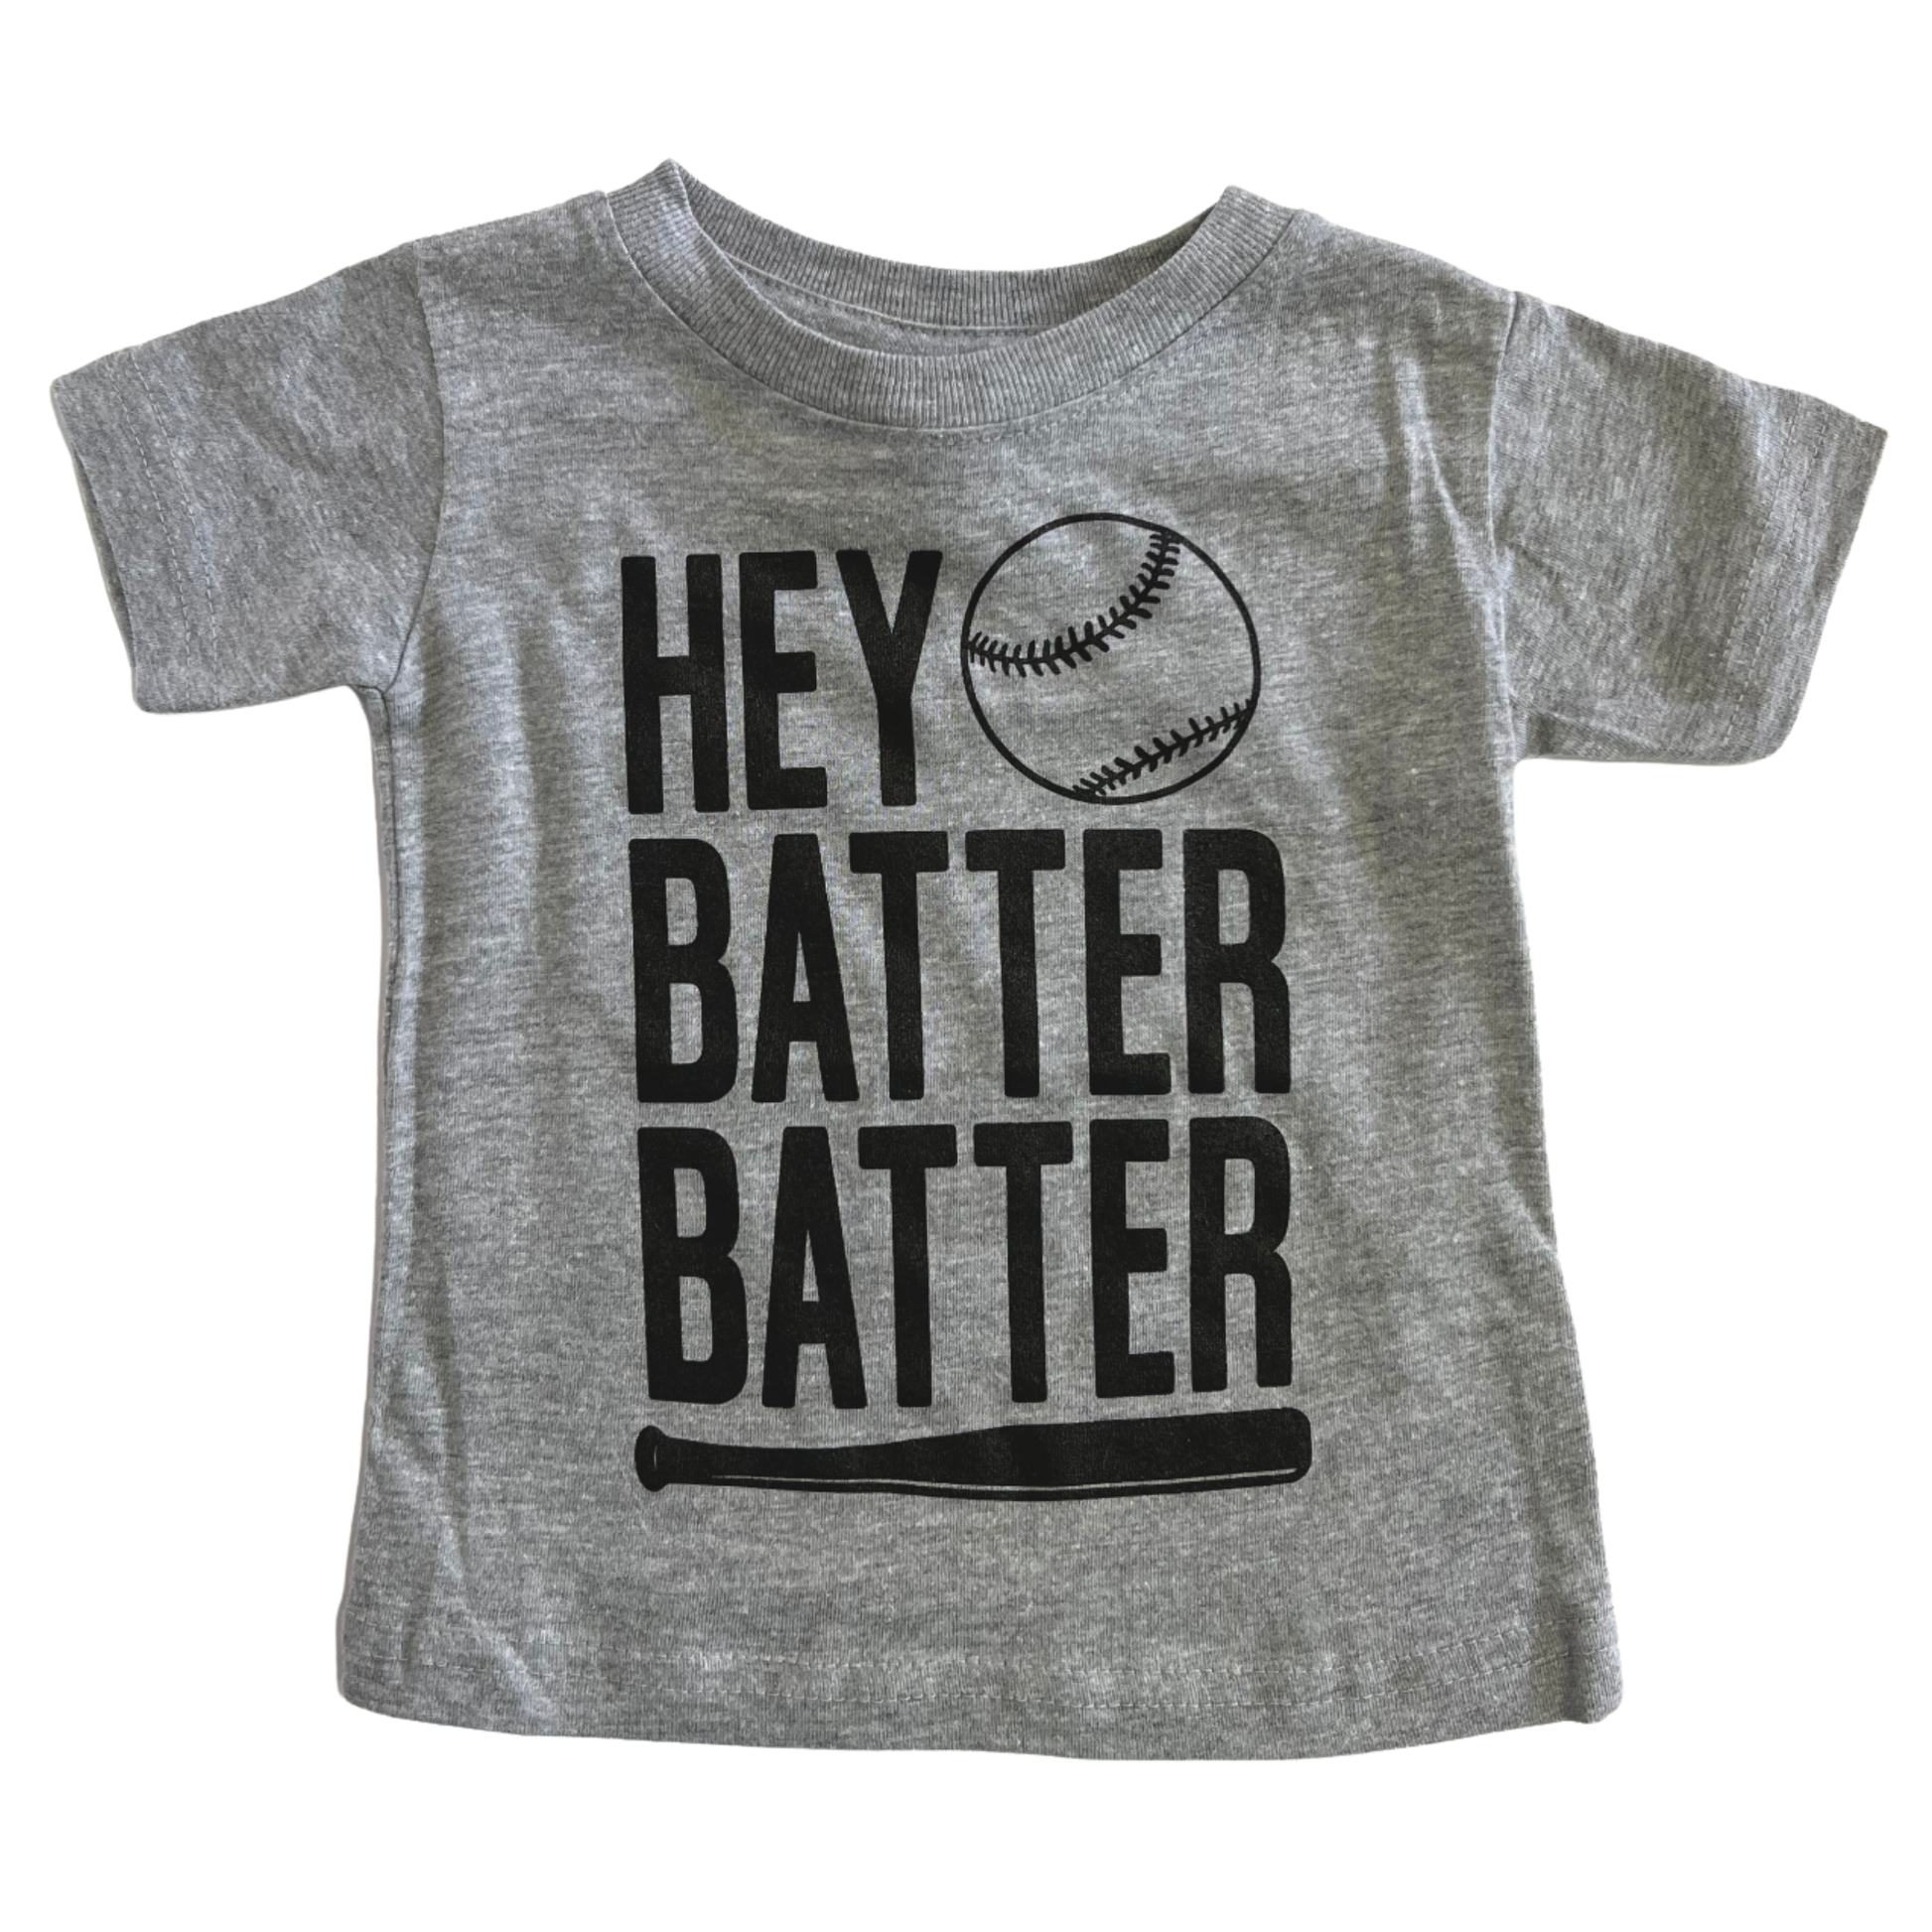 Hey Batter Batter Tee Tea for Three: A Children's Boutique